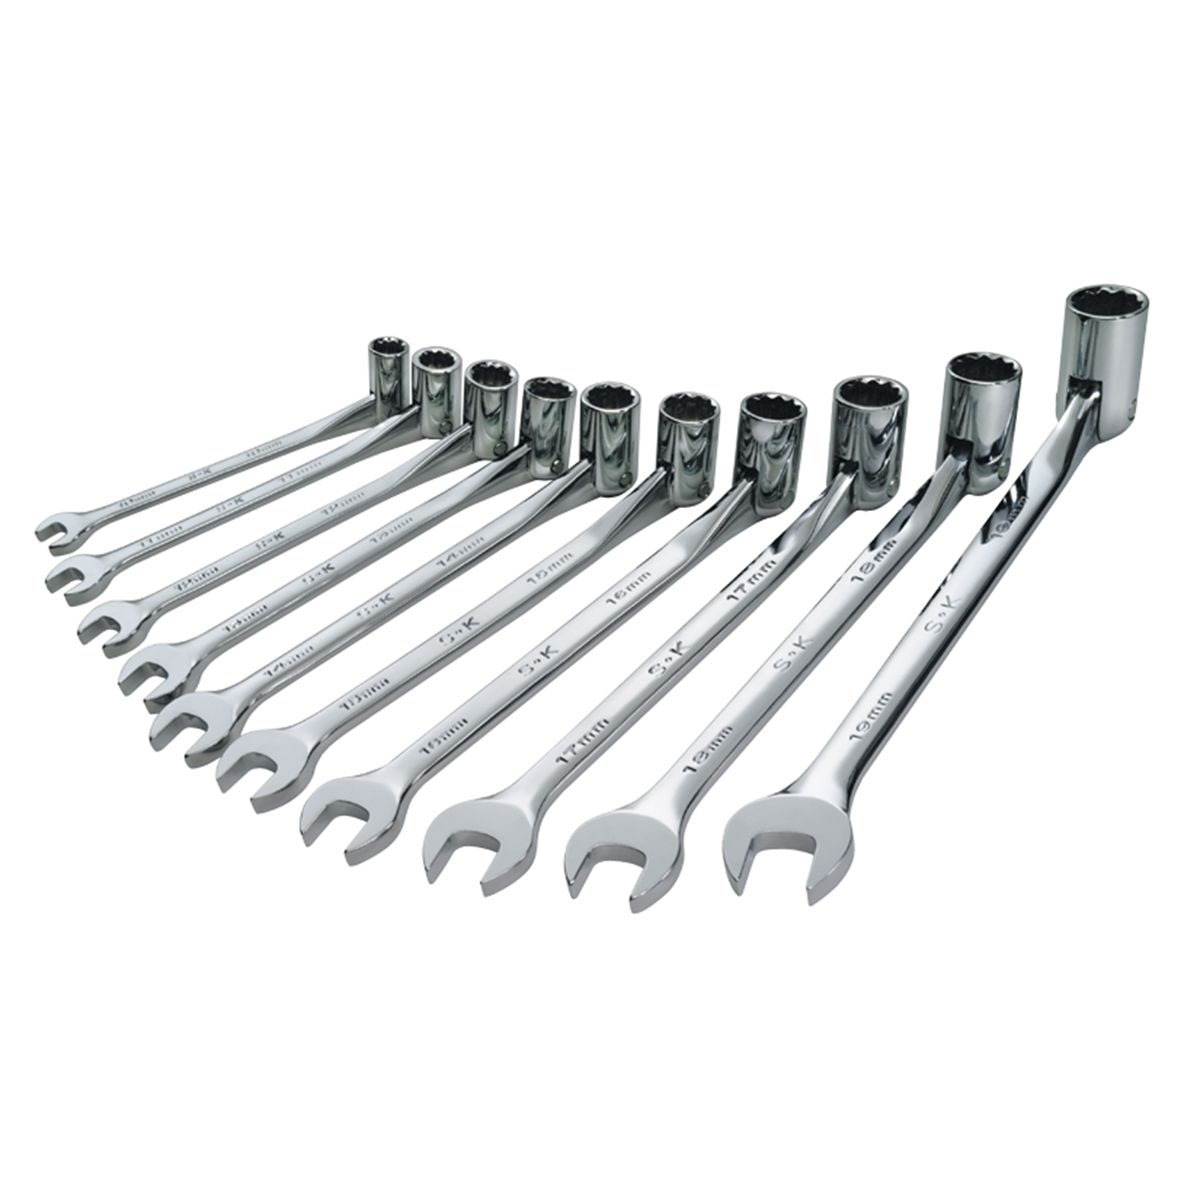 SuperKrome(R) Flex Metric Combination Wrench Set - 10 Piece